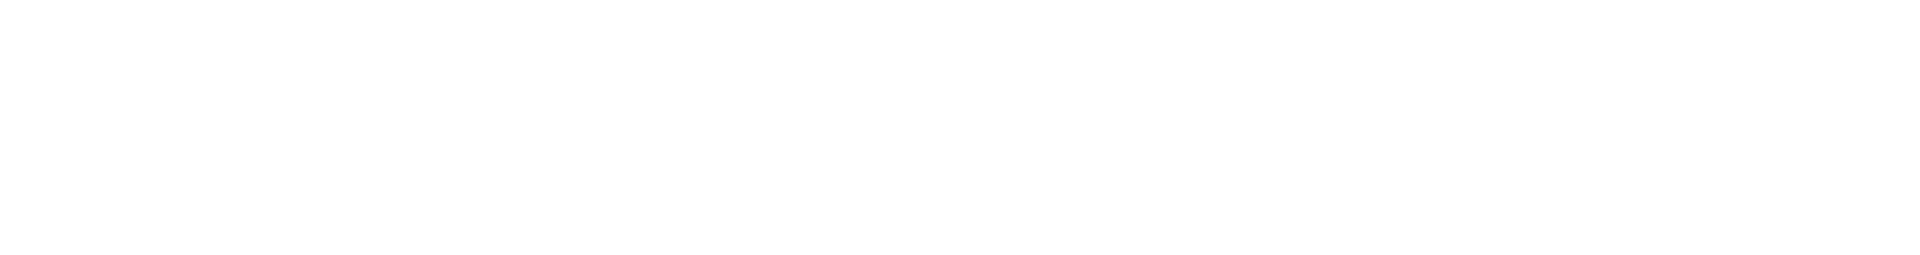 RD_logo_white - Cropped